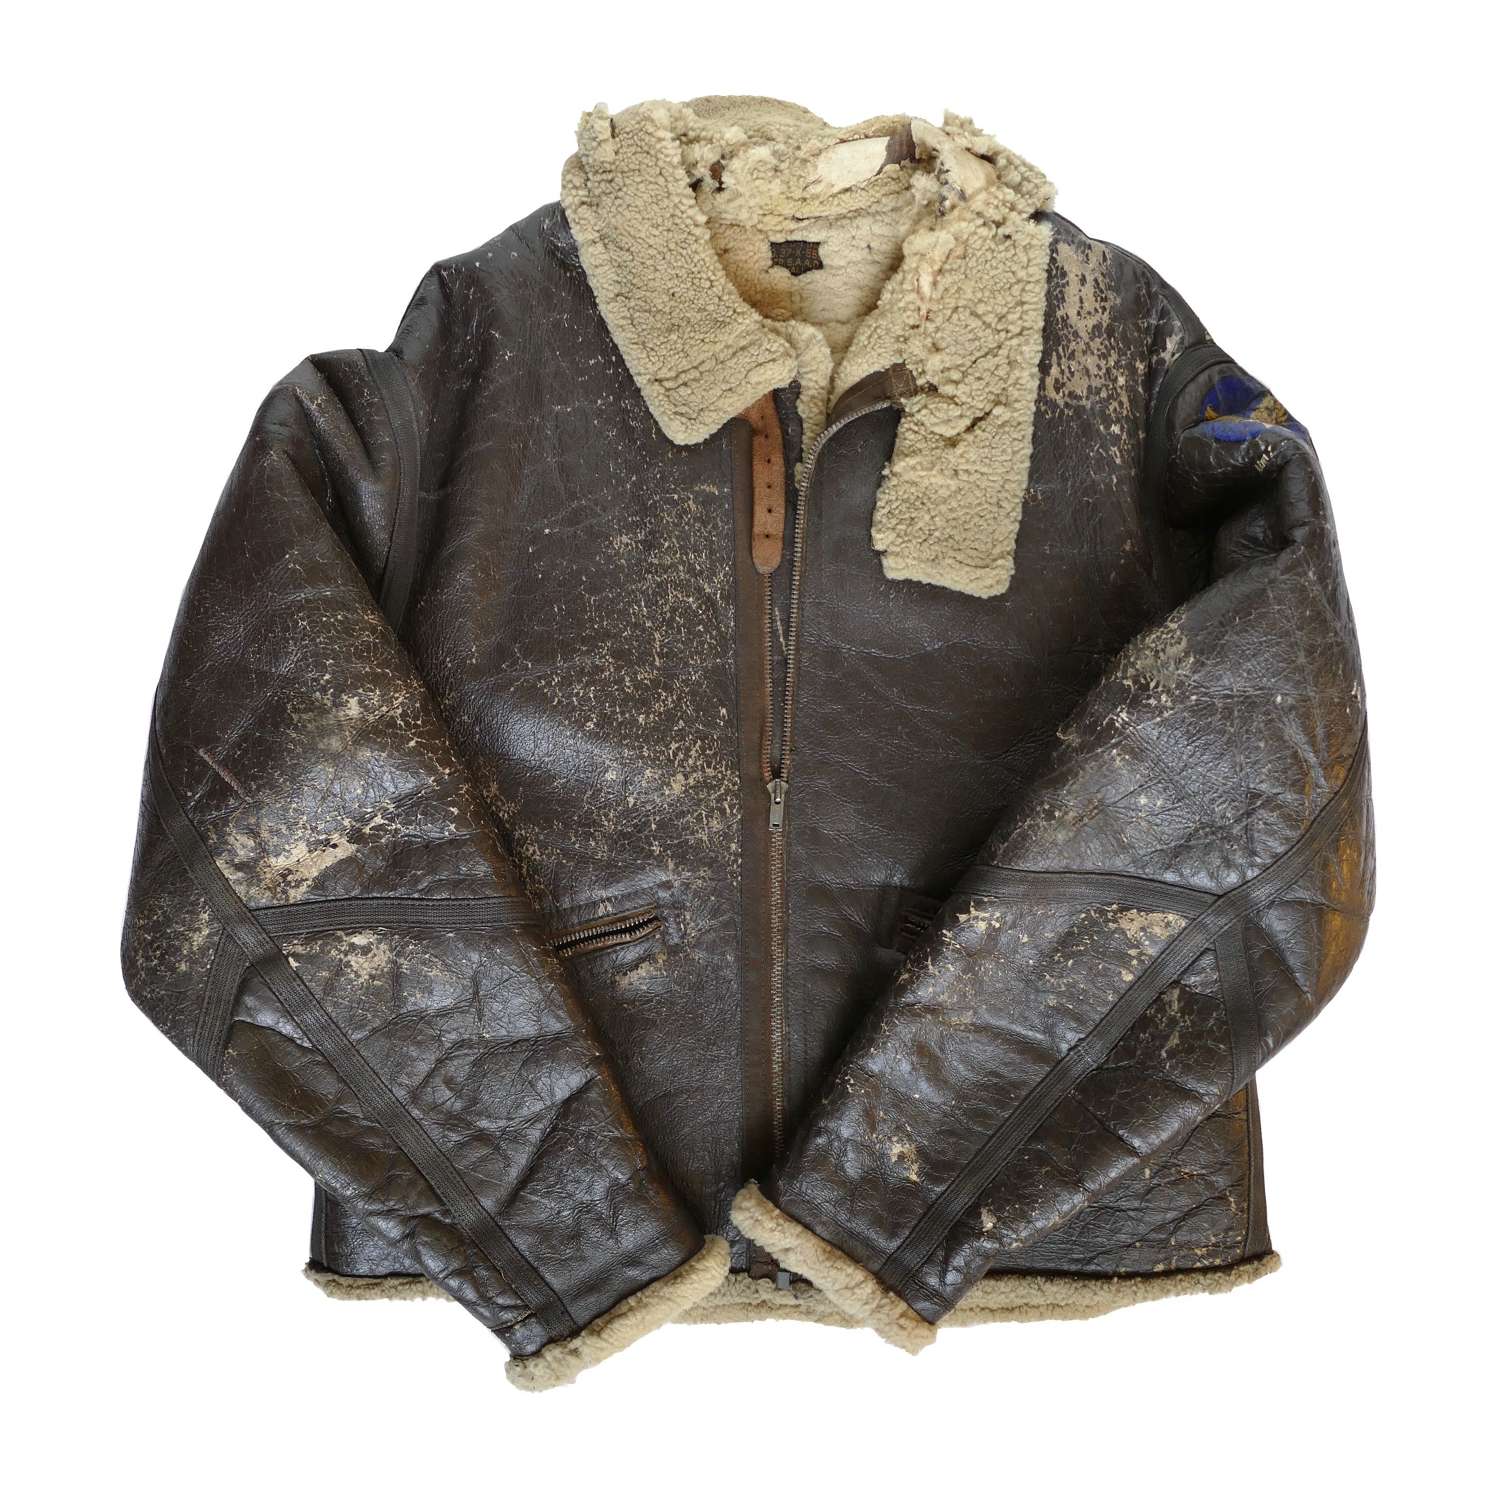 USAAF D-1 shearling jacket